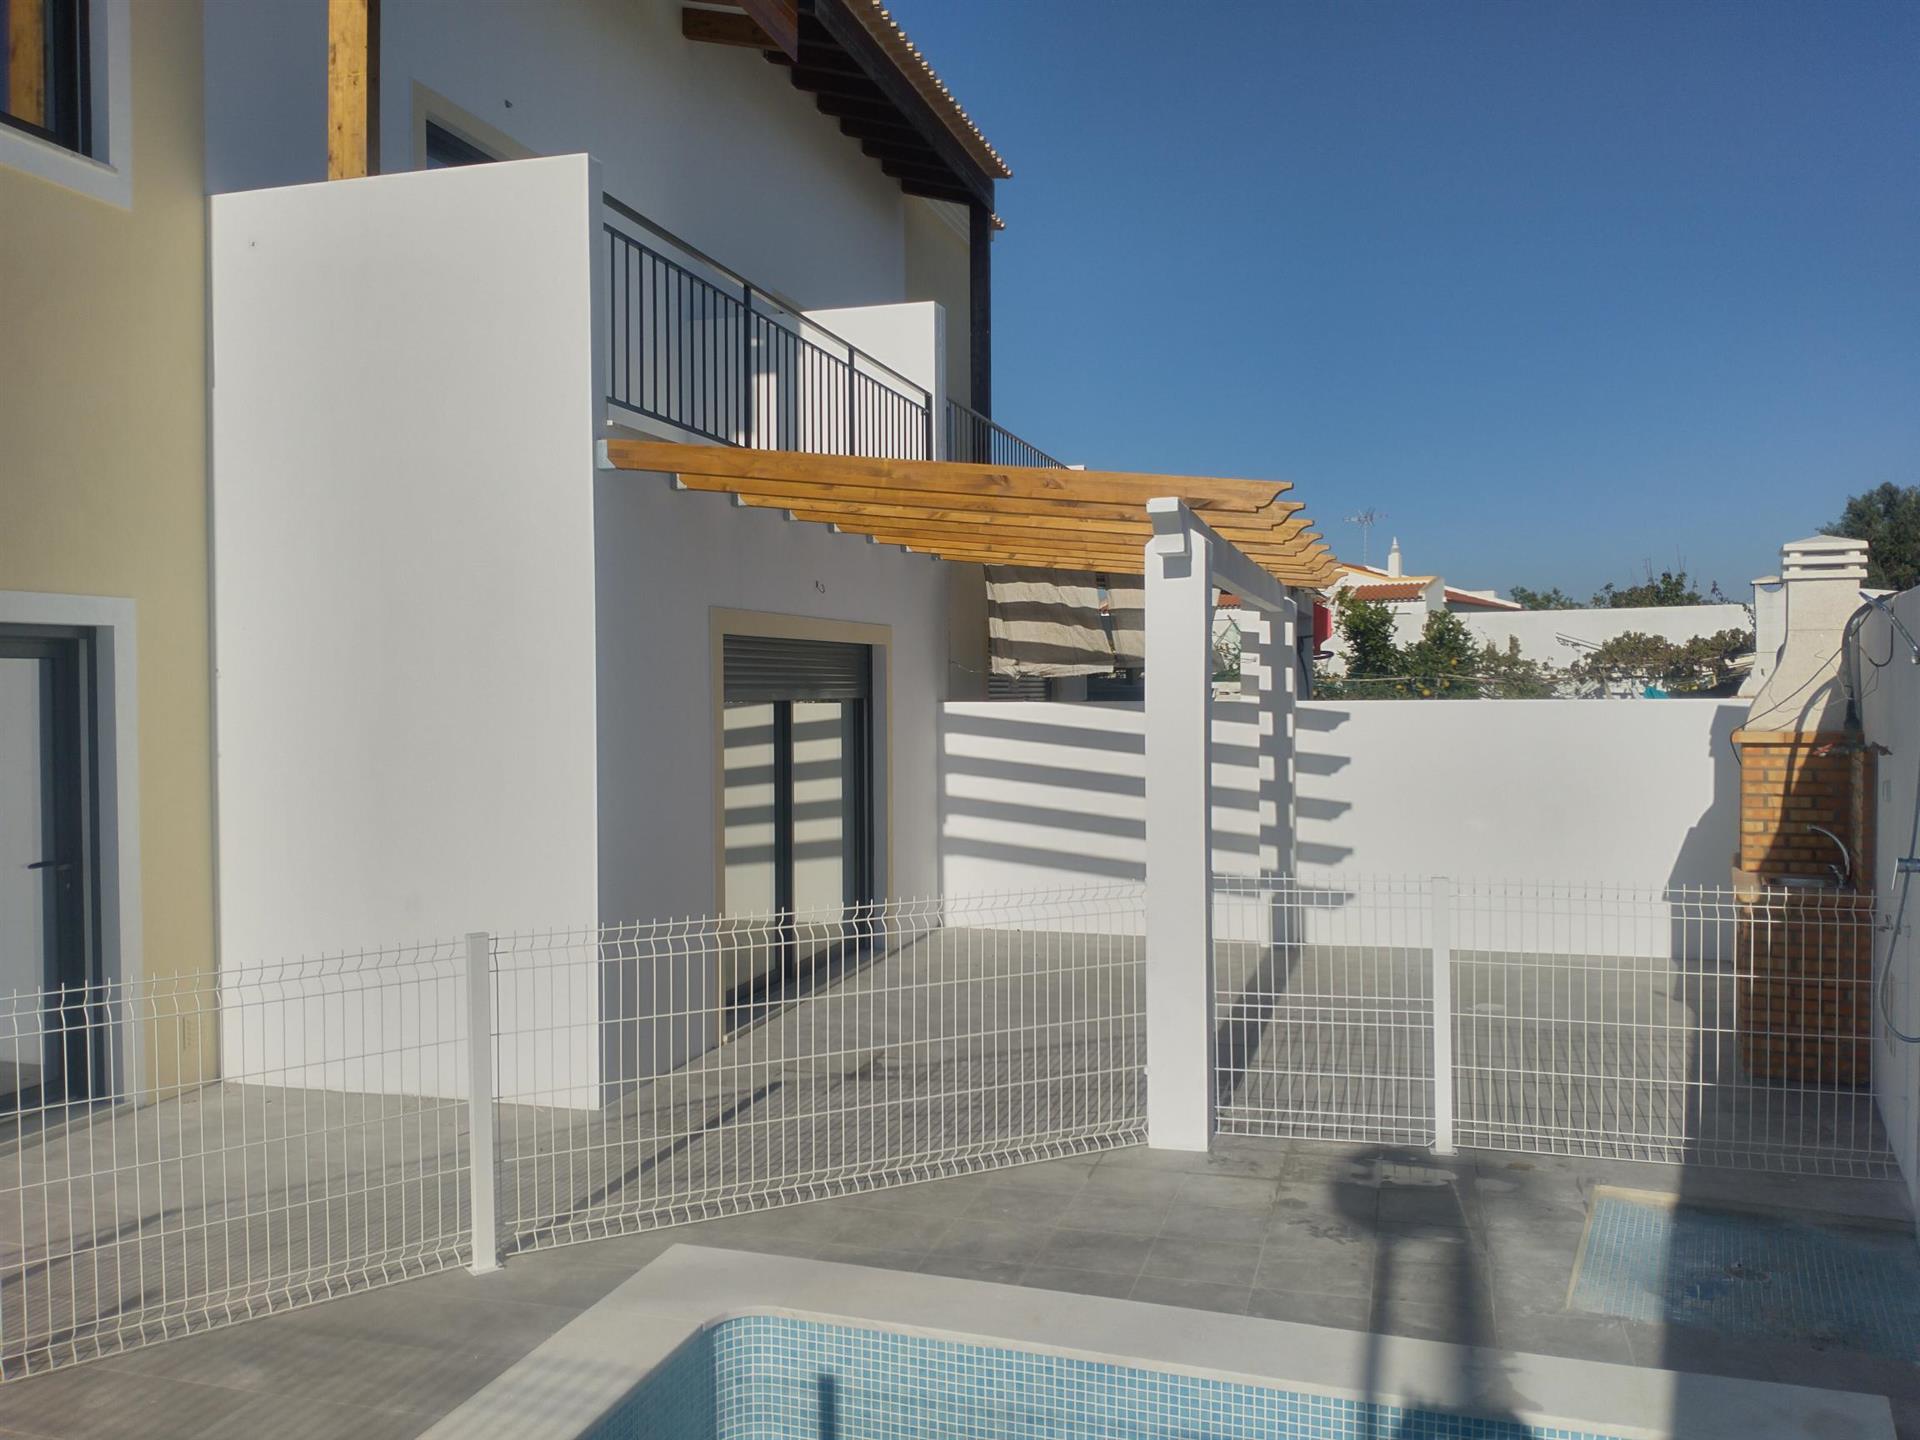 3  Bedroom Townhouse With Garage And S.Pool - Vila Nova De Cacela